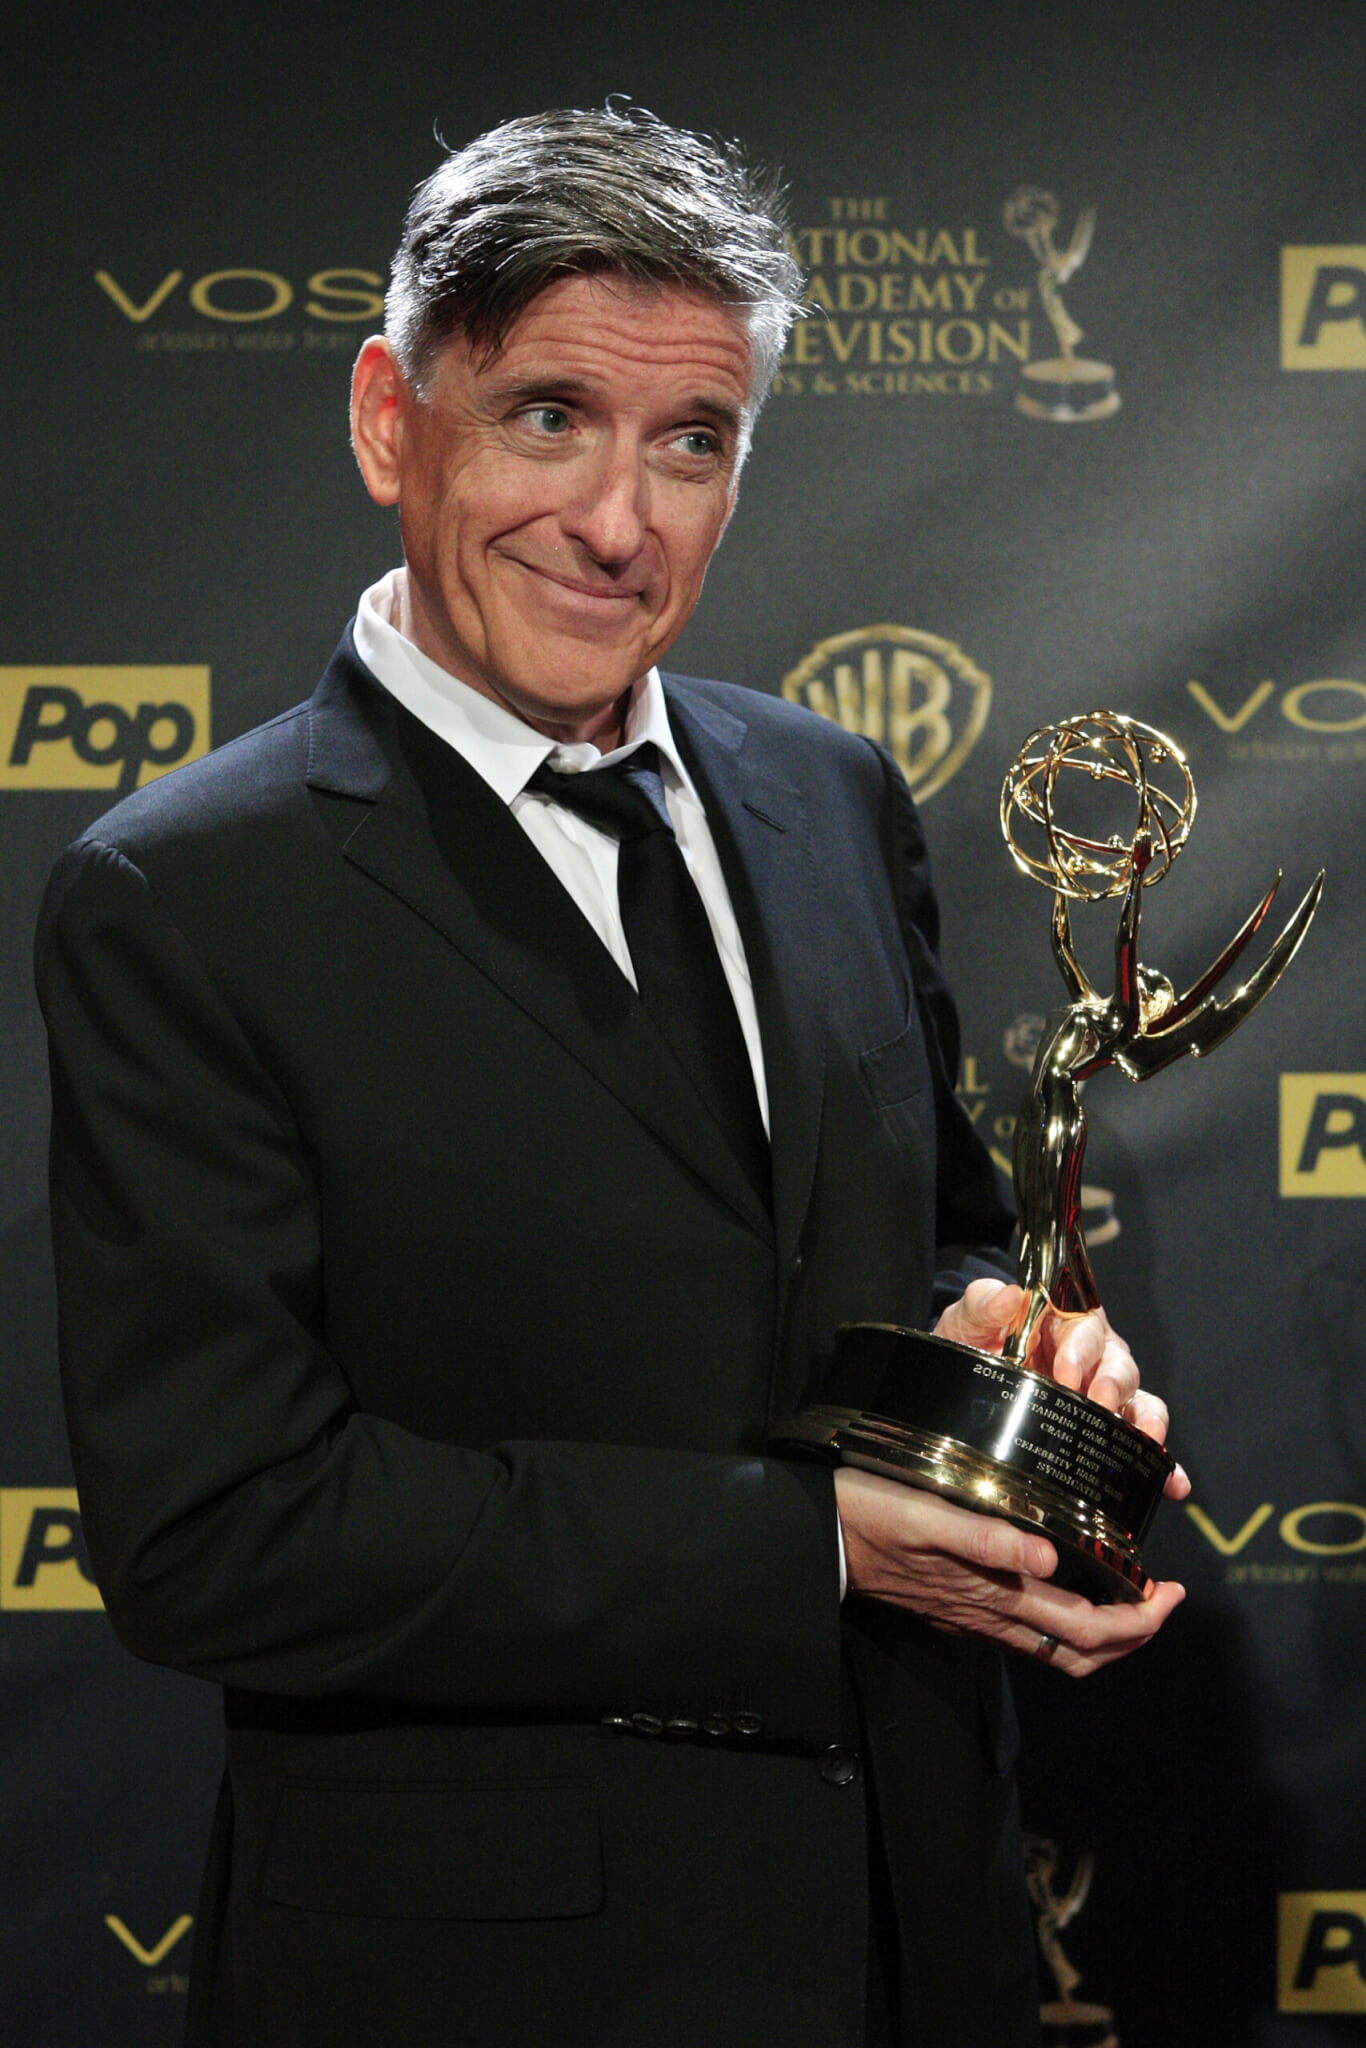 Craig Ferguson at the 42nd Daytime Emmy Awards Gala in 2015 